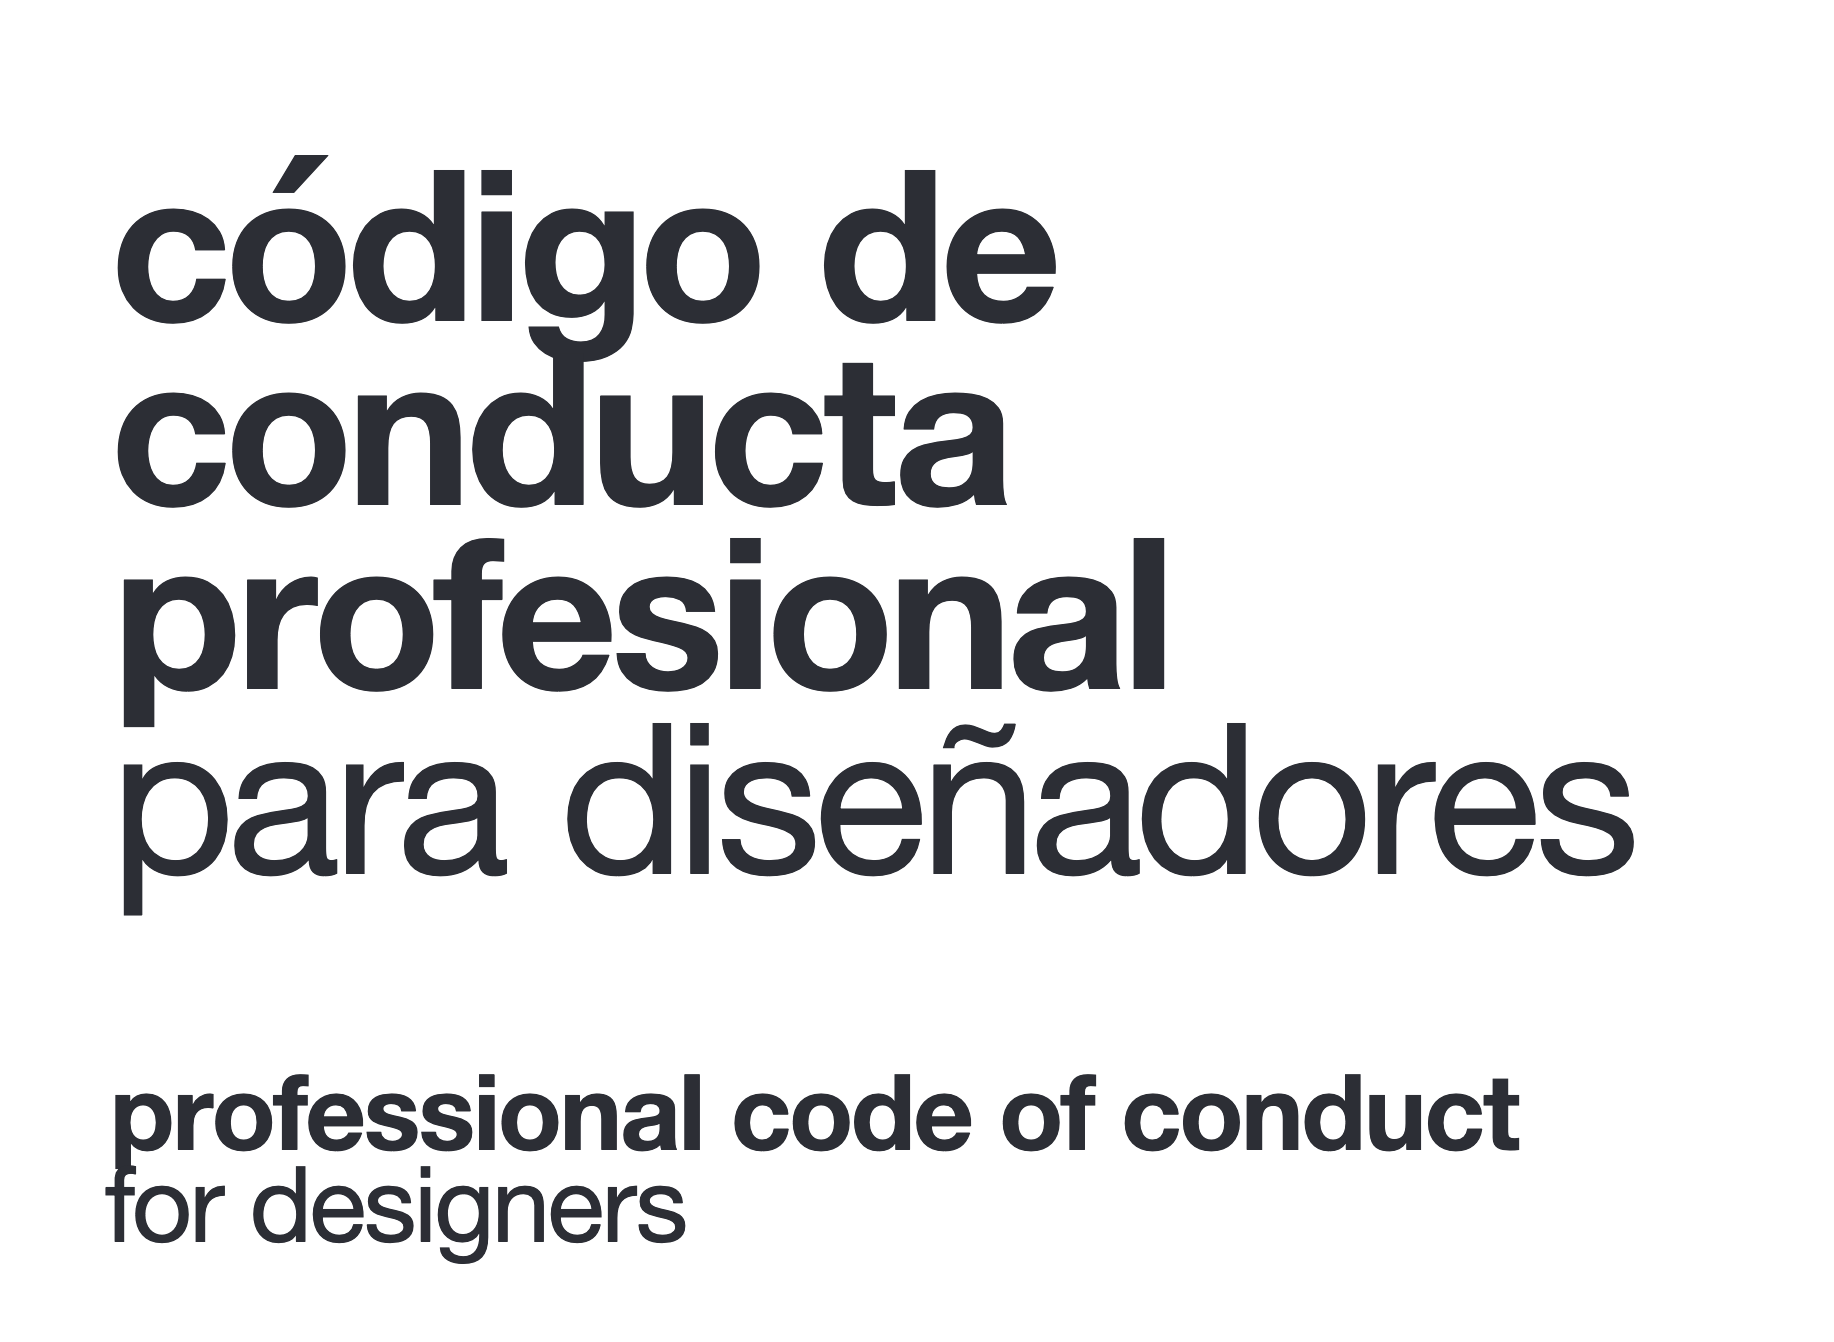 ICoD code translated to spanish